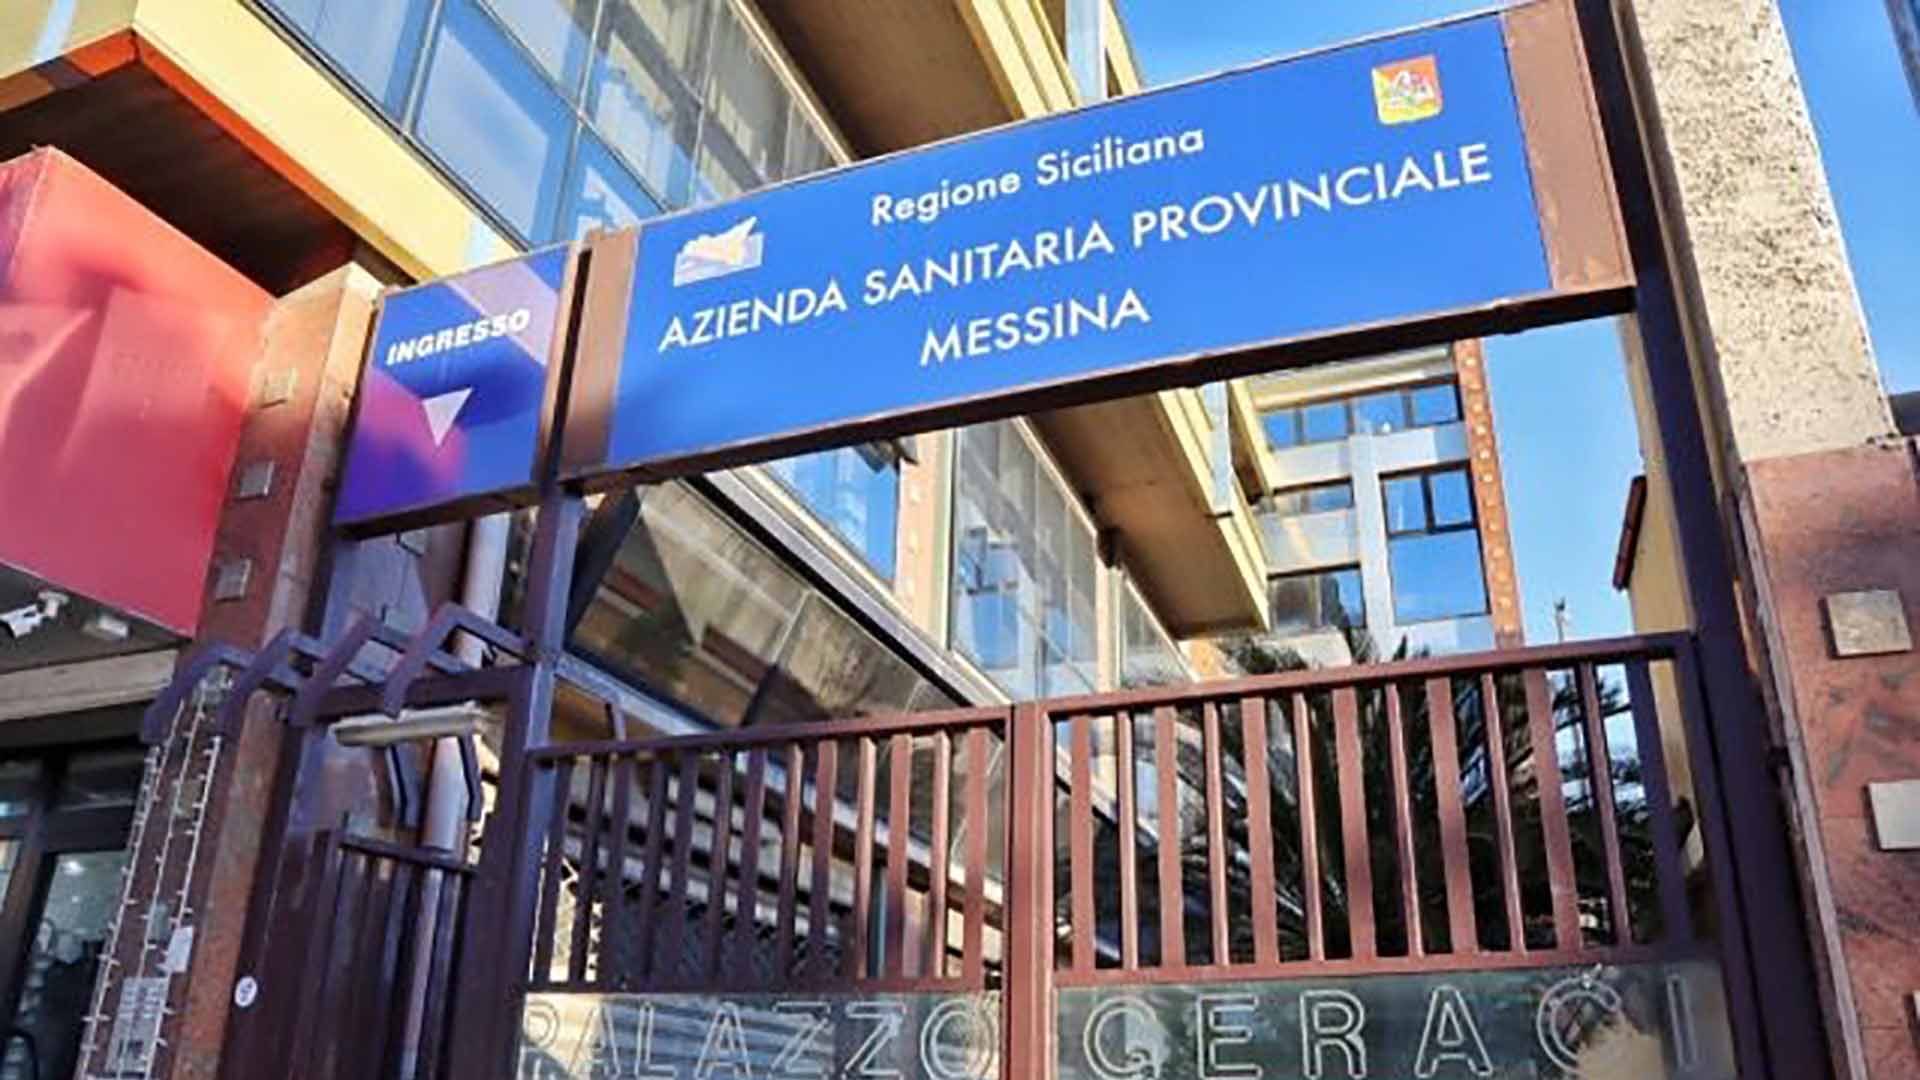 ASP Messina_MessinaWebTv_Cronaca